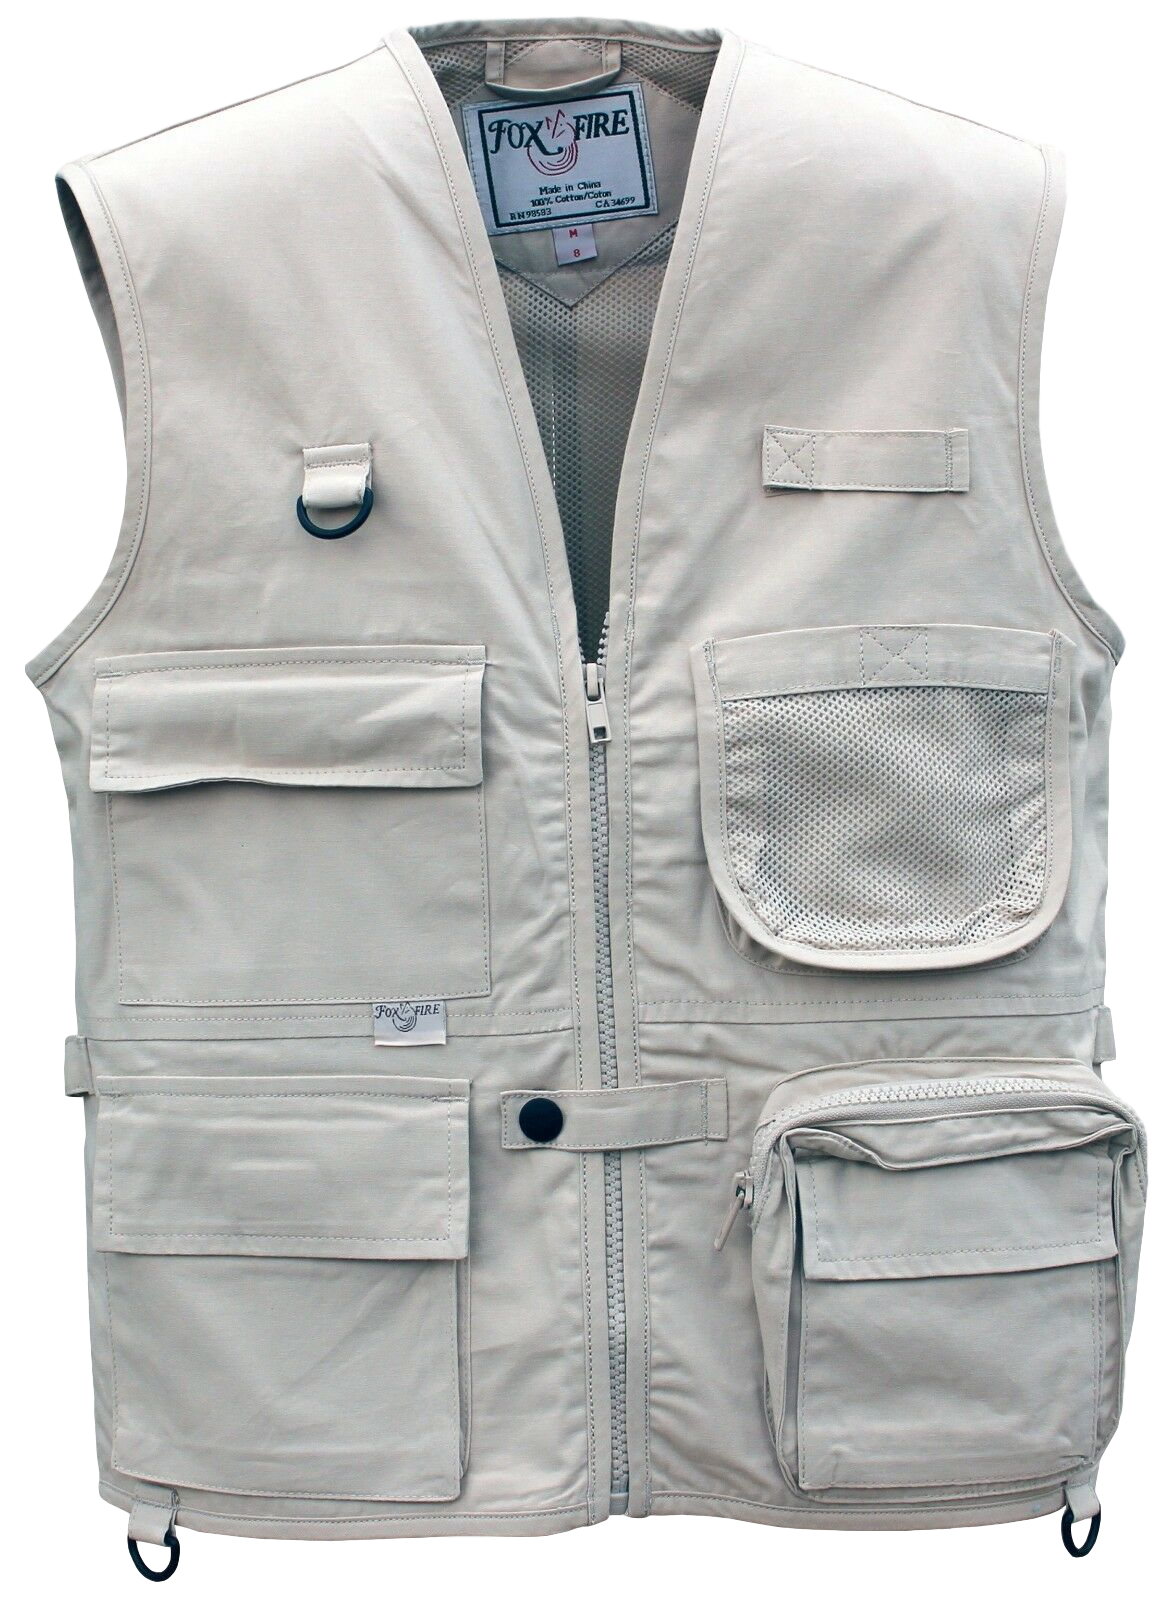 Kayjet Safari Wear Fishing Vest XL - sporting goods - by owner - sale -  craigslist